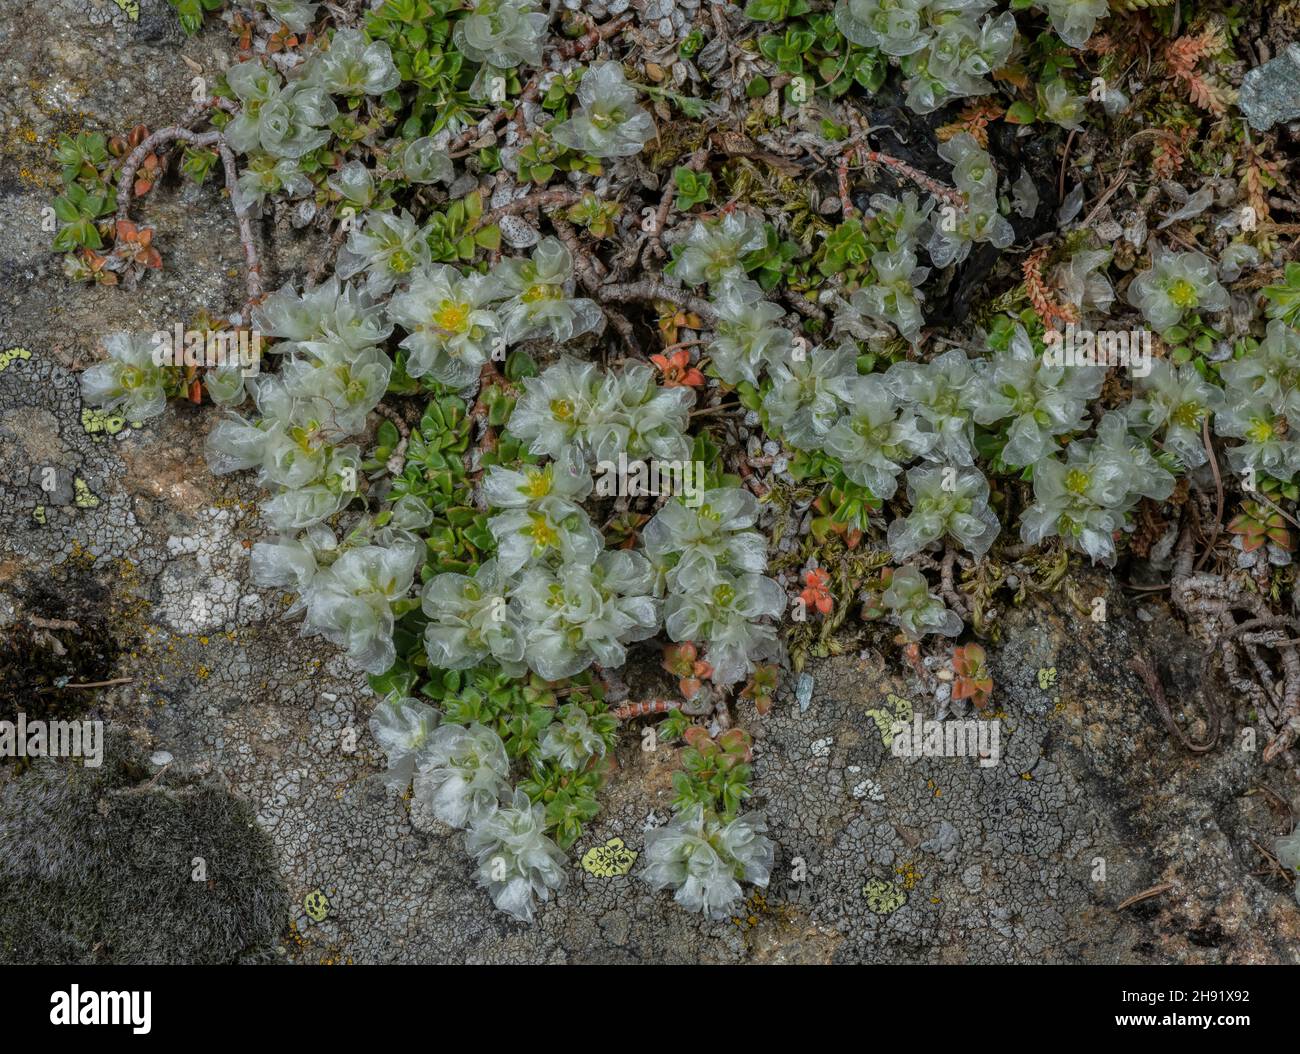 Paronychia kapela ssp serpyllifolia in flower in the Alps. Stock Photo